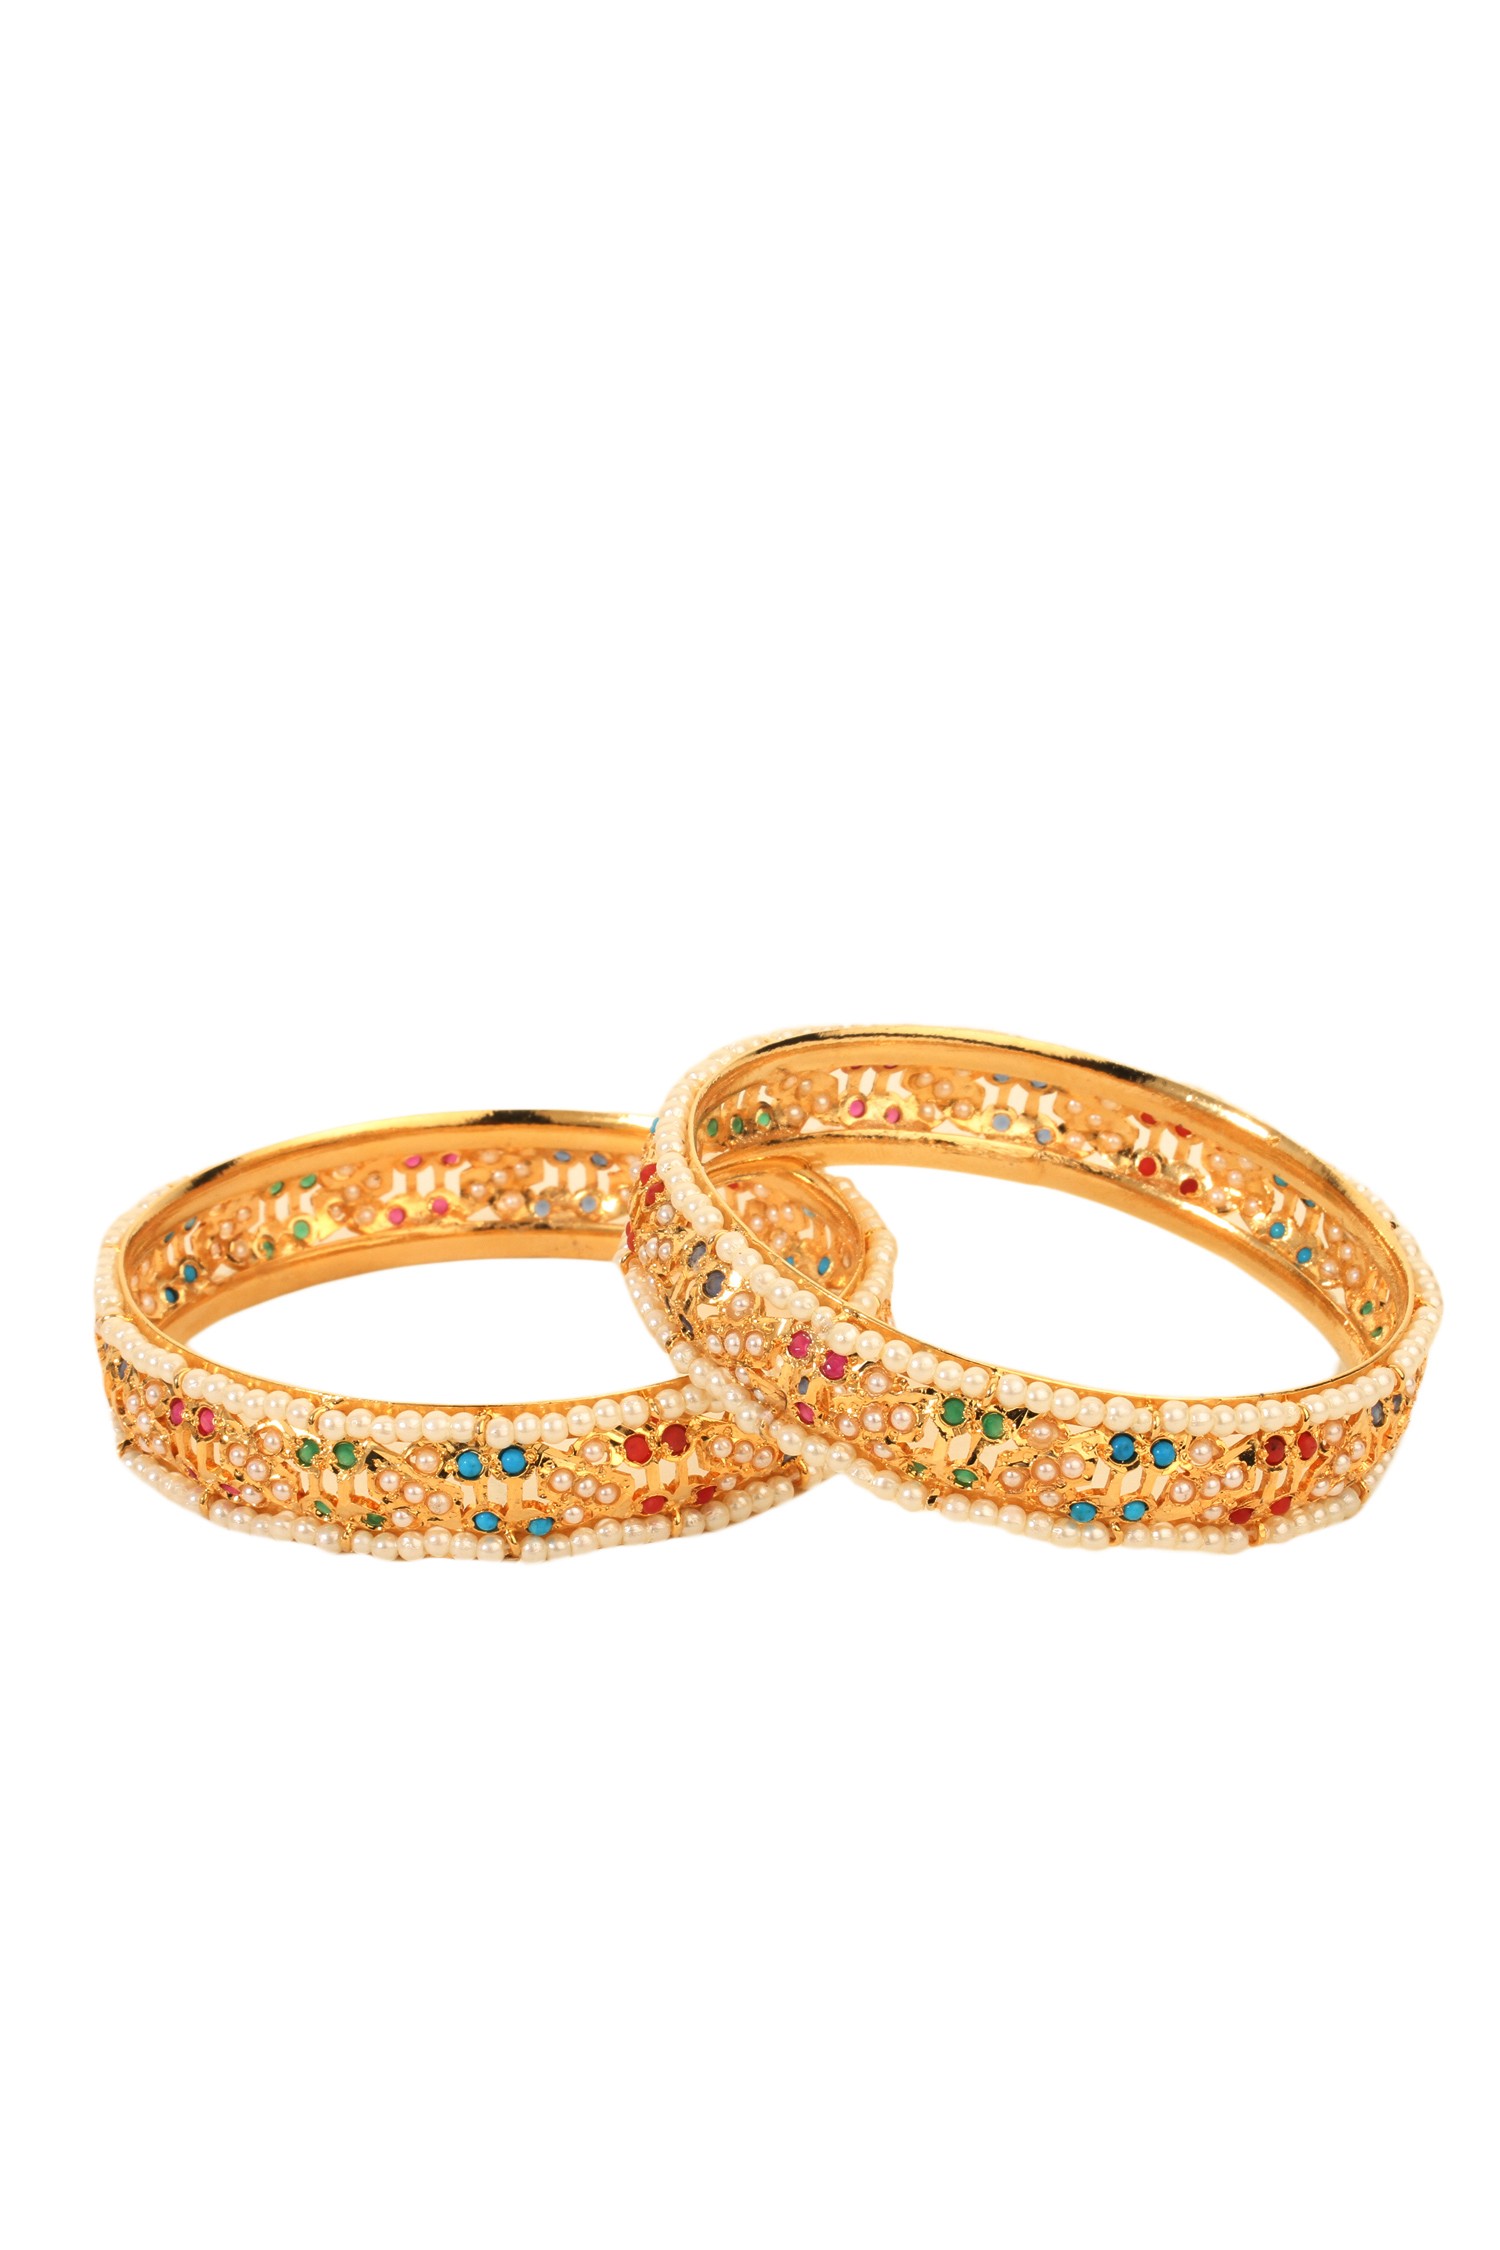 Dilan Jewels PURE Collection Multicolor Golden Navratna Jadau Indian ...